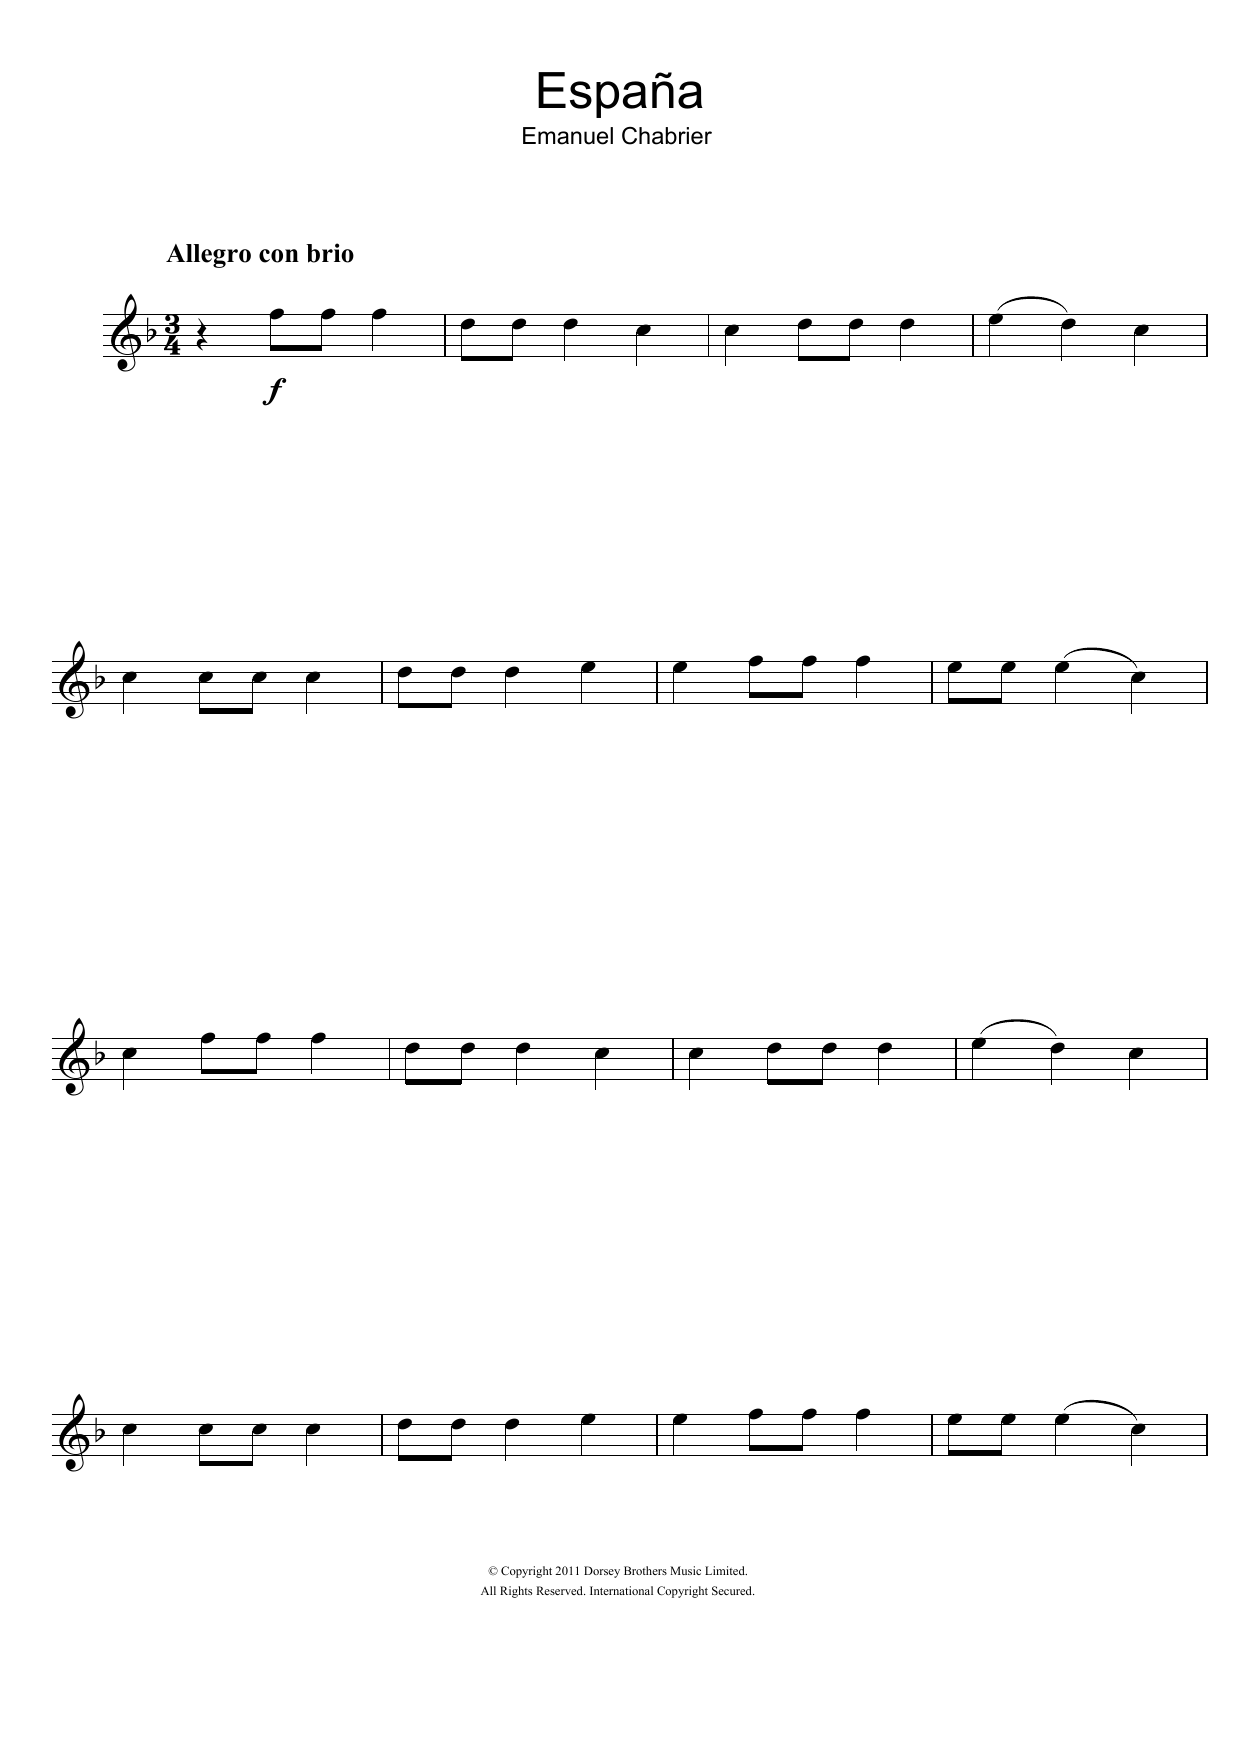 Emanuel Chabrier España sheet music notes printable PDF score